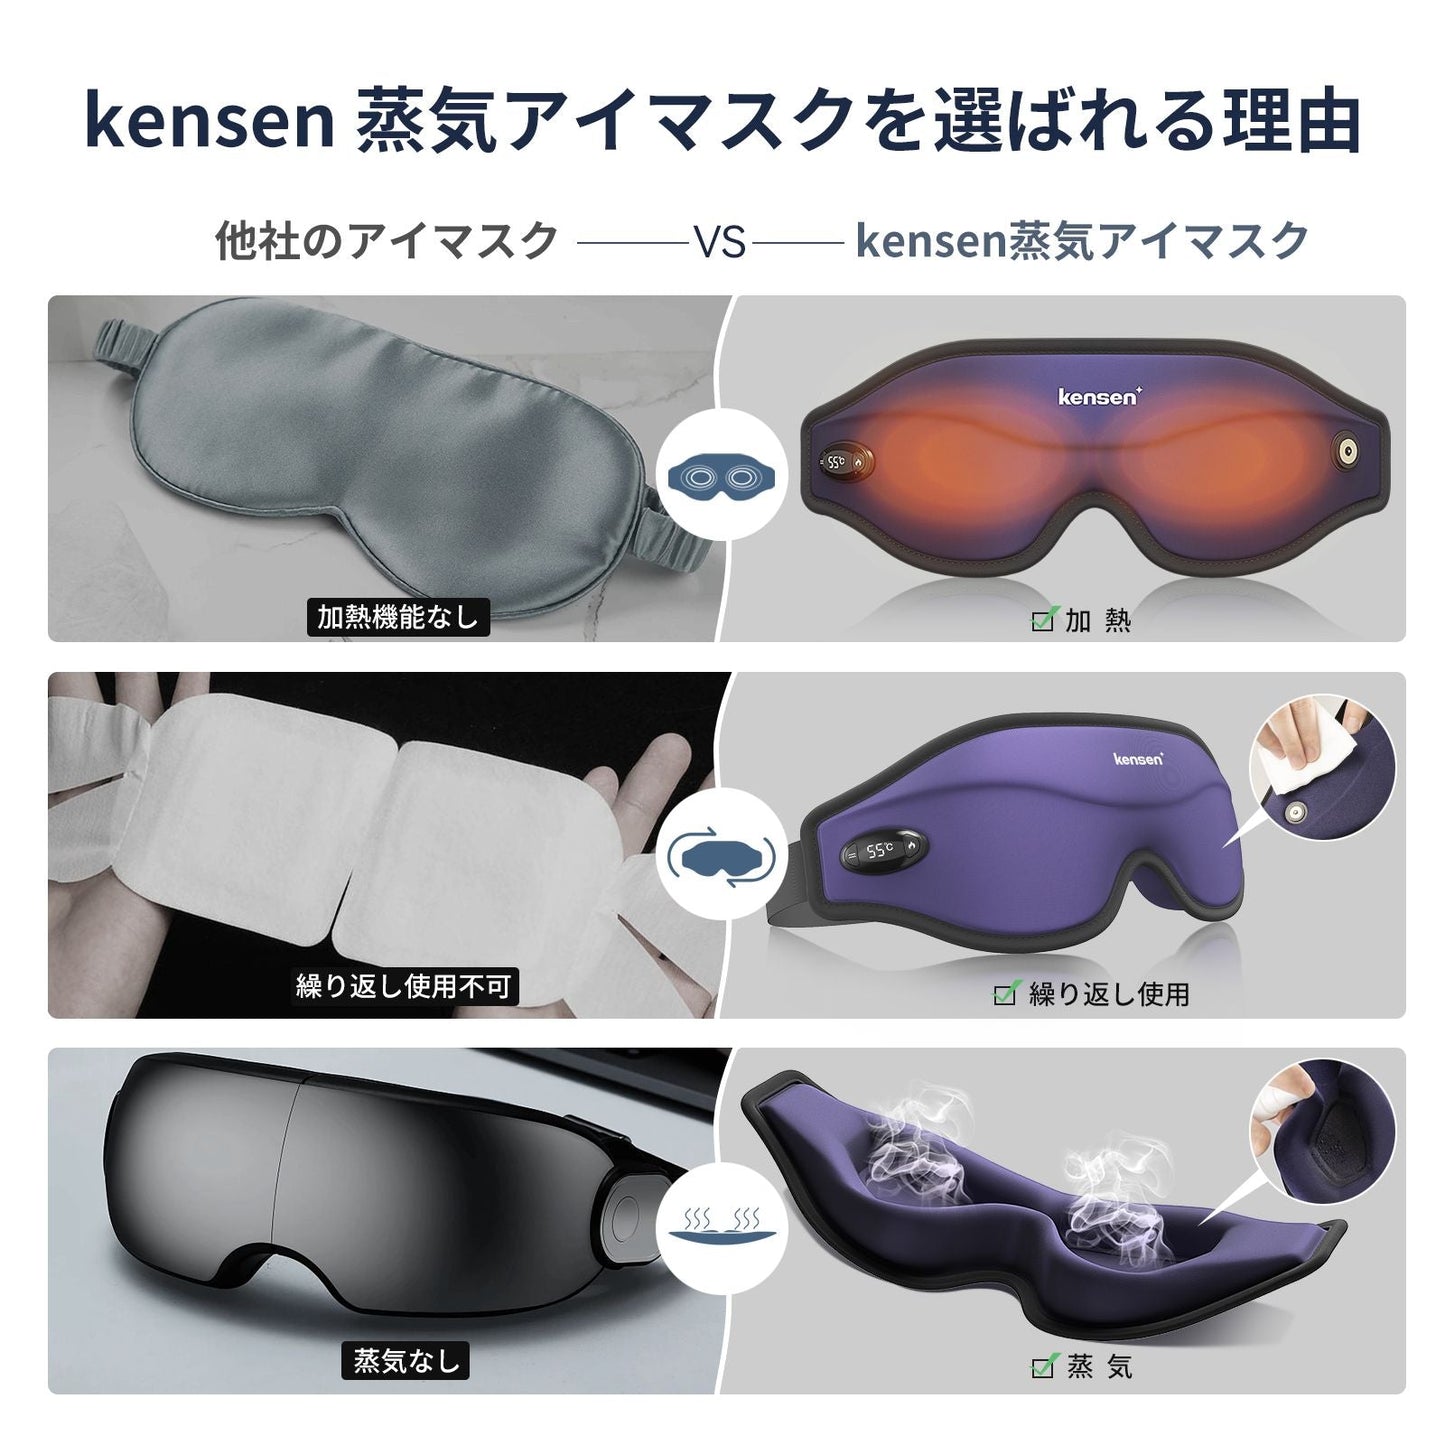 kensen ホットアイマスク 温熱 振動 3段階調節